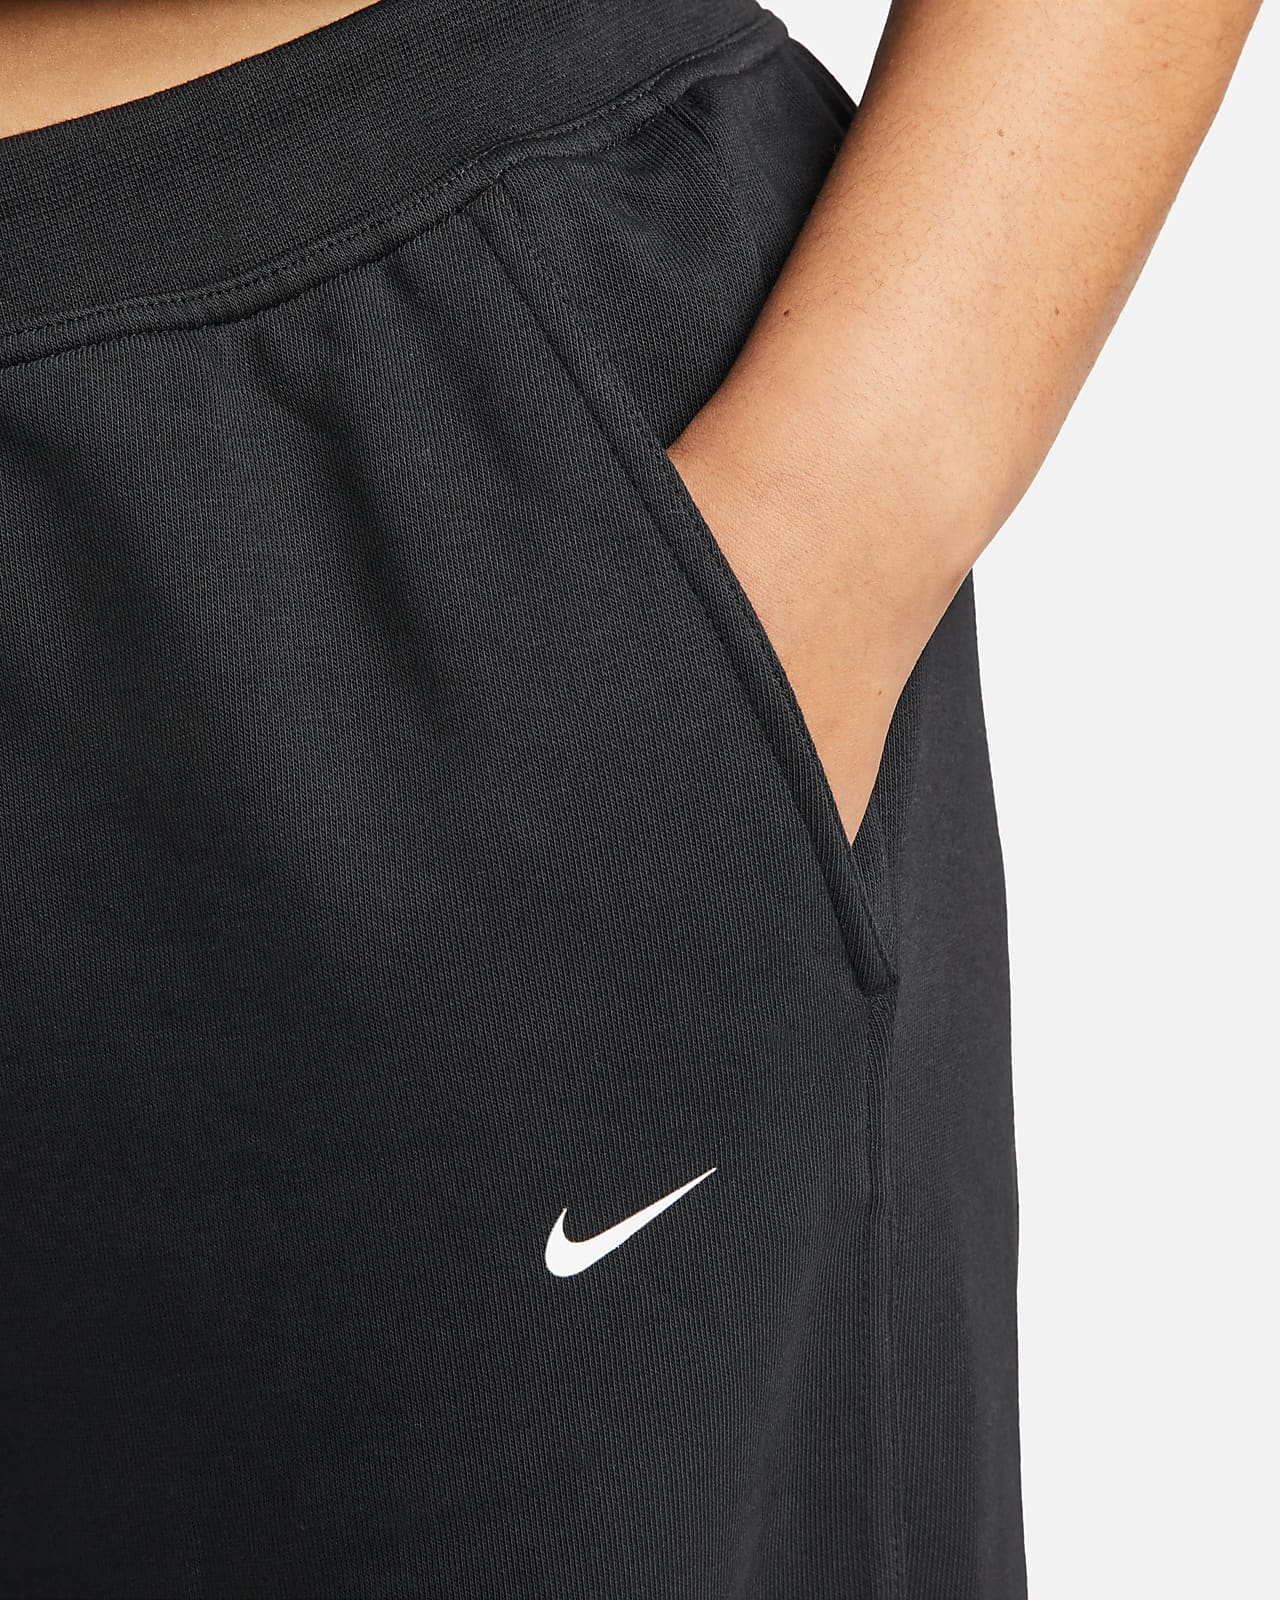 Nike Dri-FIT Get Fit Women's Training Pants (Plus Size). Nike.com